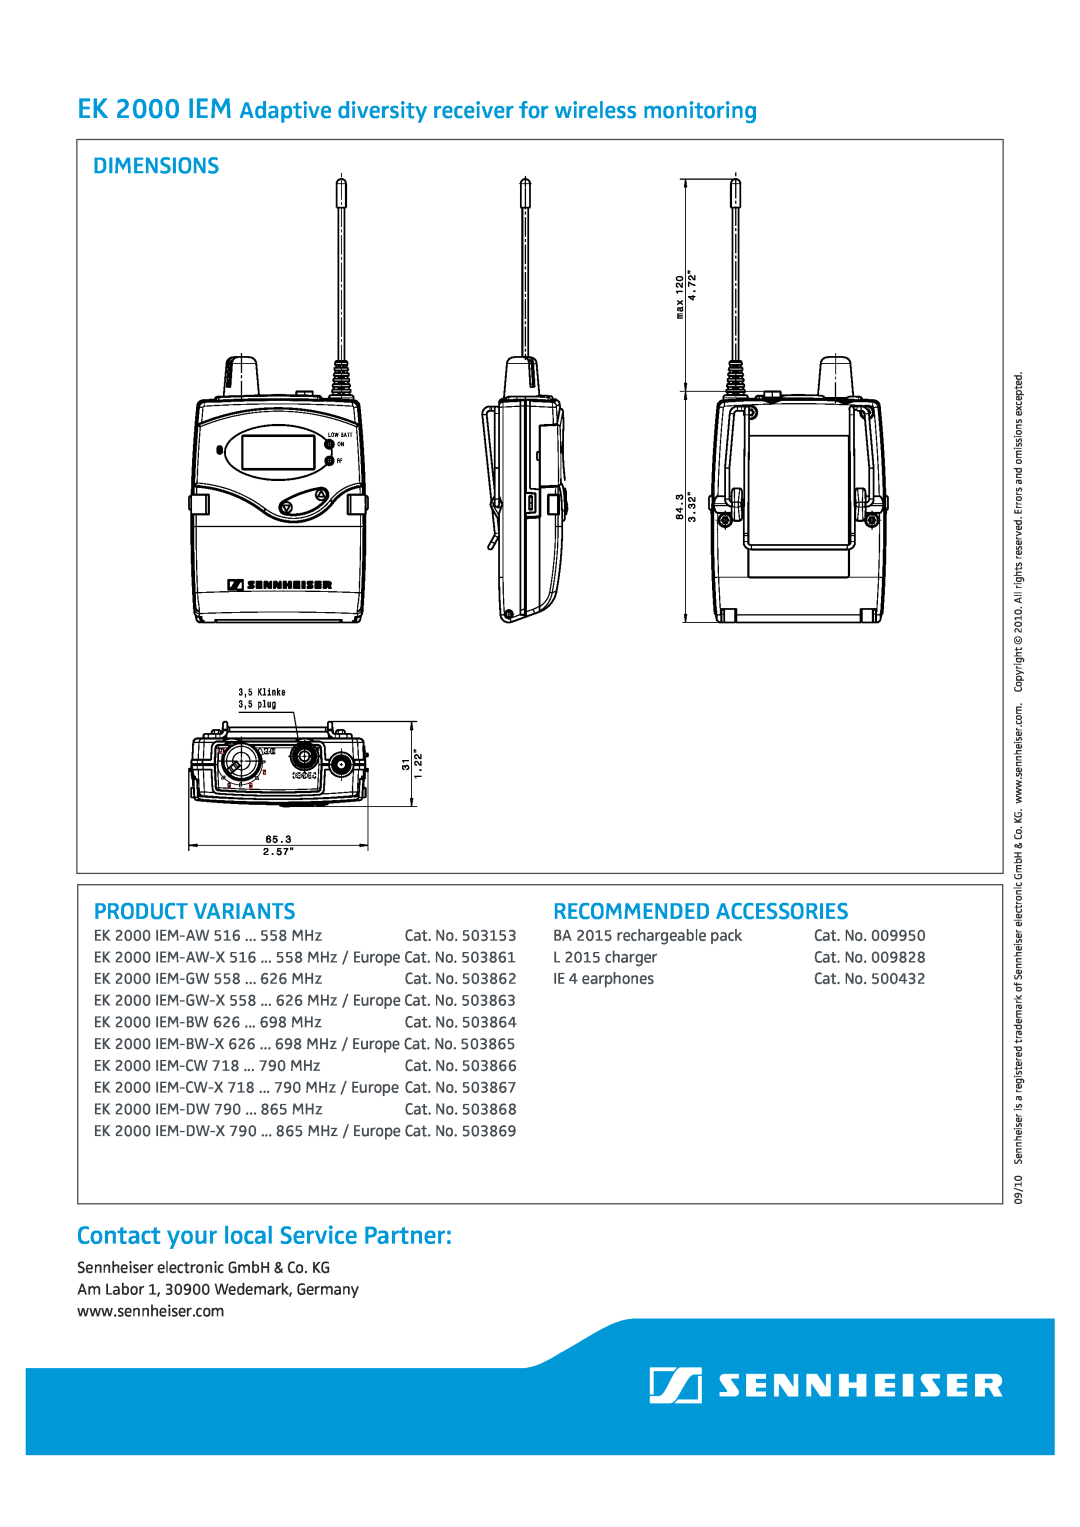 Sennheiser EK 2000 IEM-GW-X EK 2000 IEM Adaptive diversity receiver for wireless monitoring, Dimensions, Product Variants 